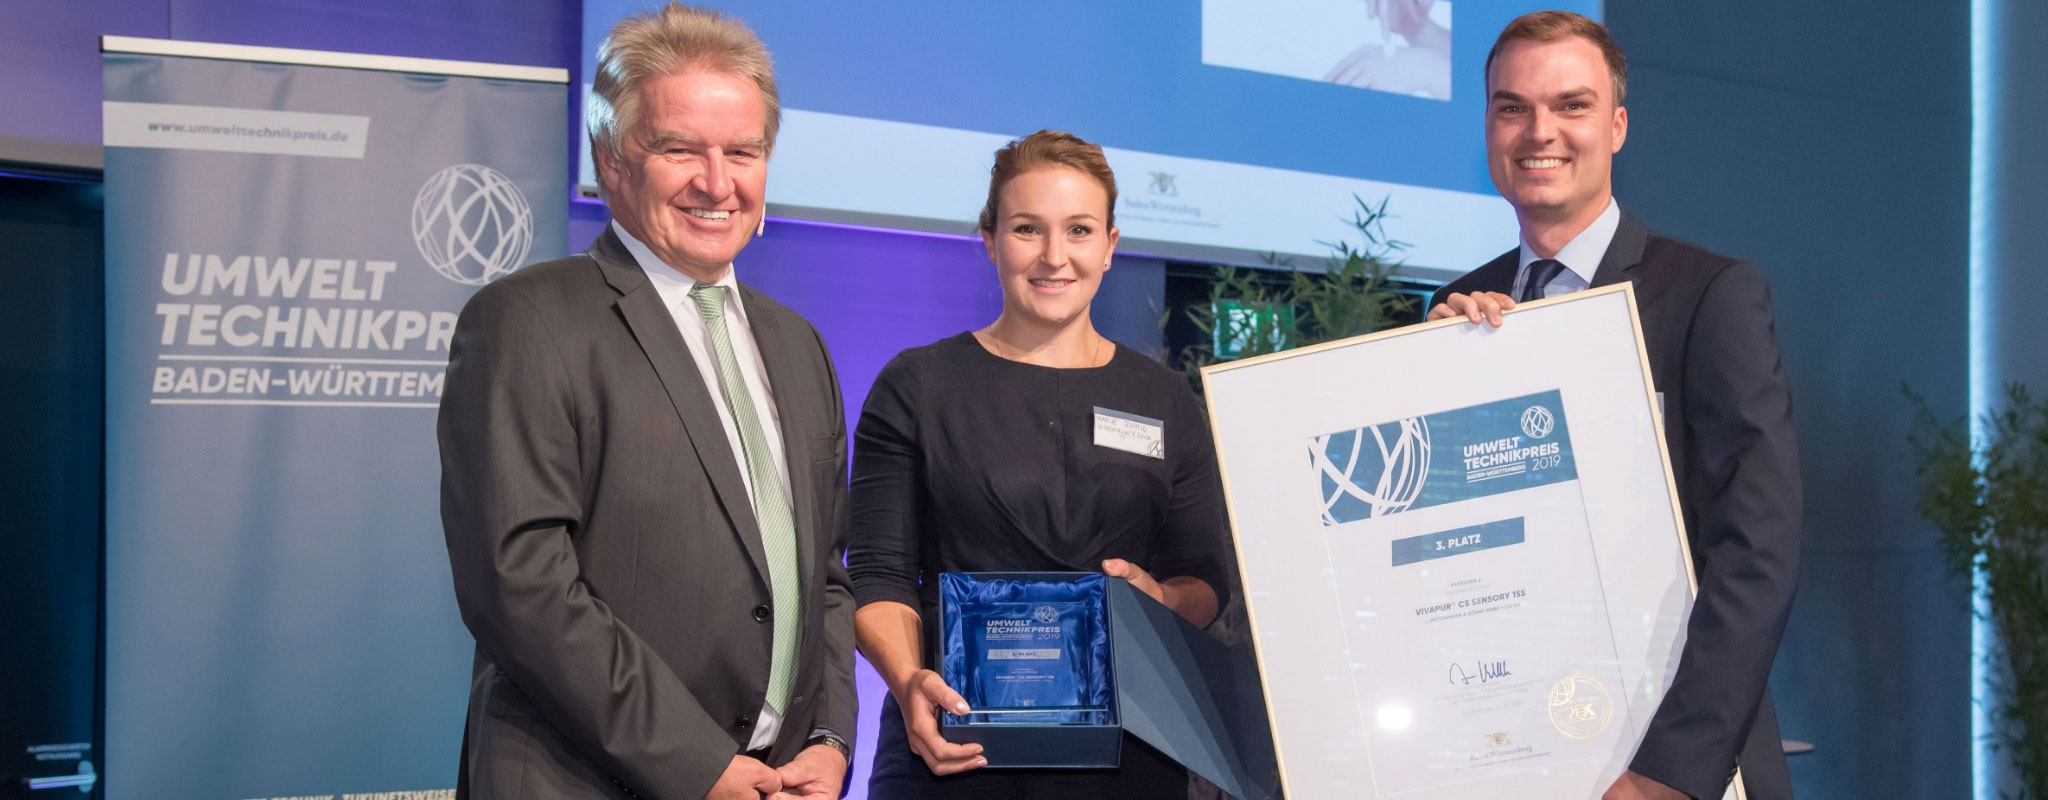 JRS erhält Umwelttechnikpreis Baden-Württemberg 2019